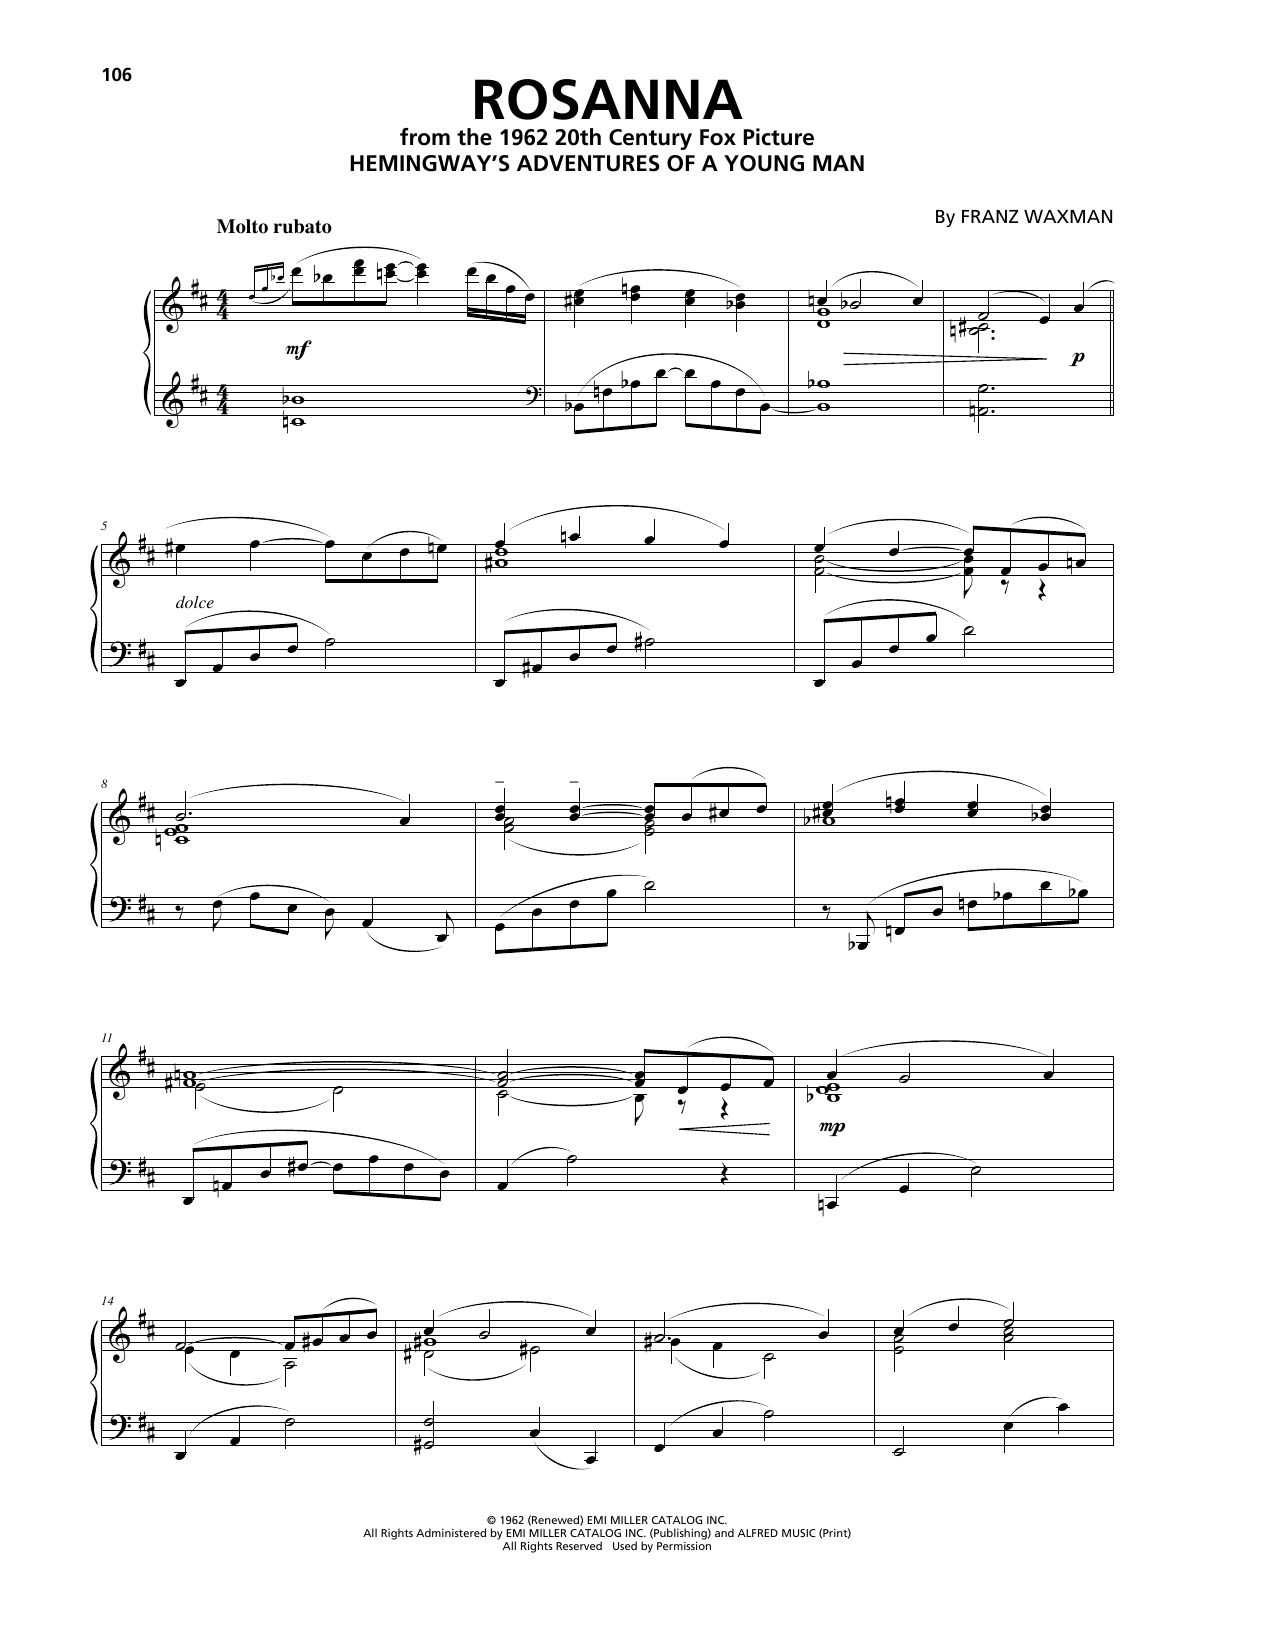 Franz Waxman Rosanna Sheet Music Notes & Chords for Piano - Download or Print PDF